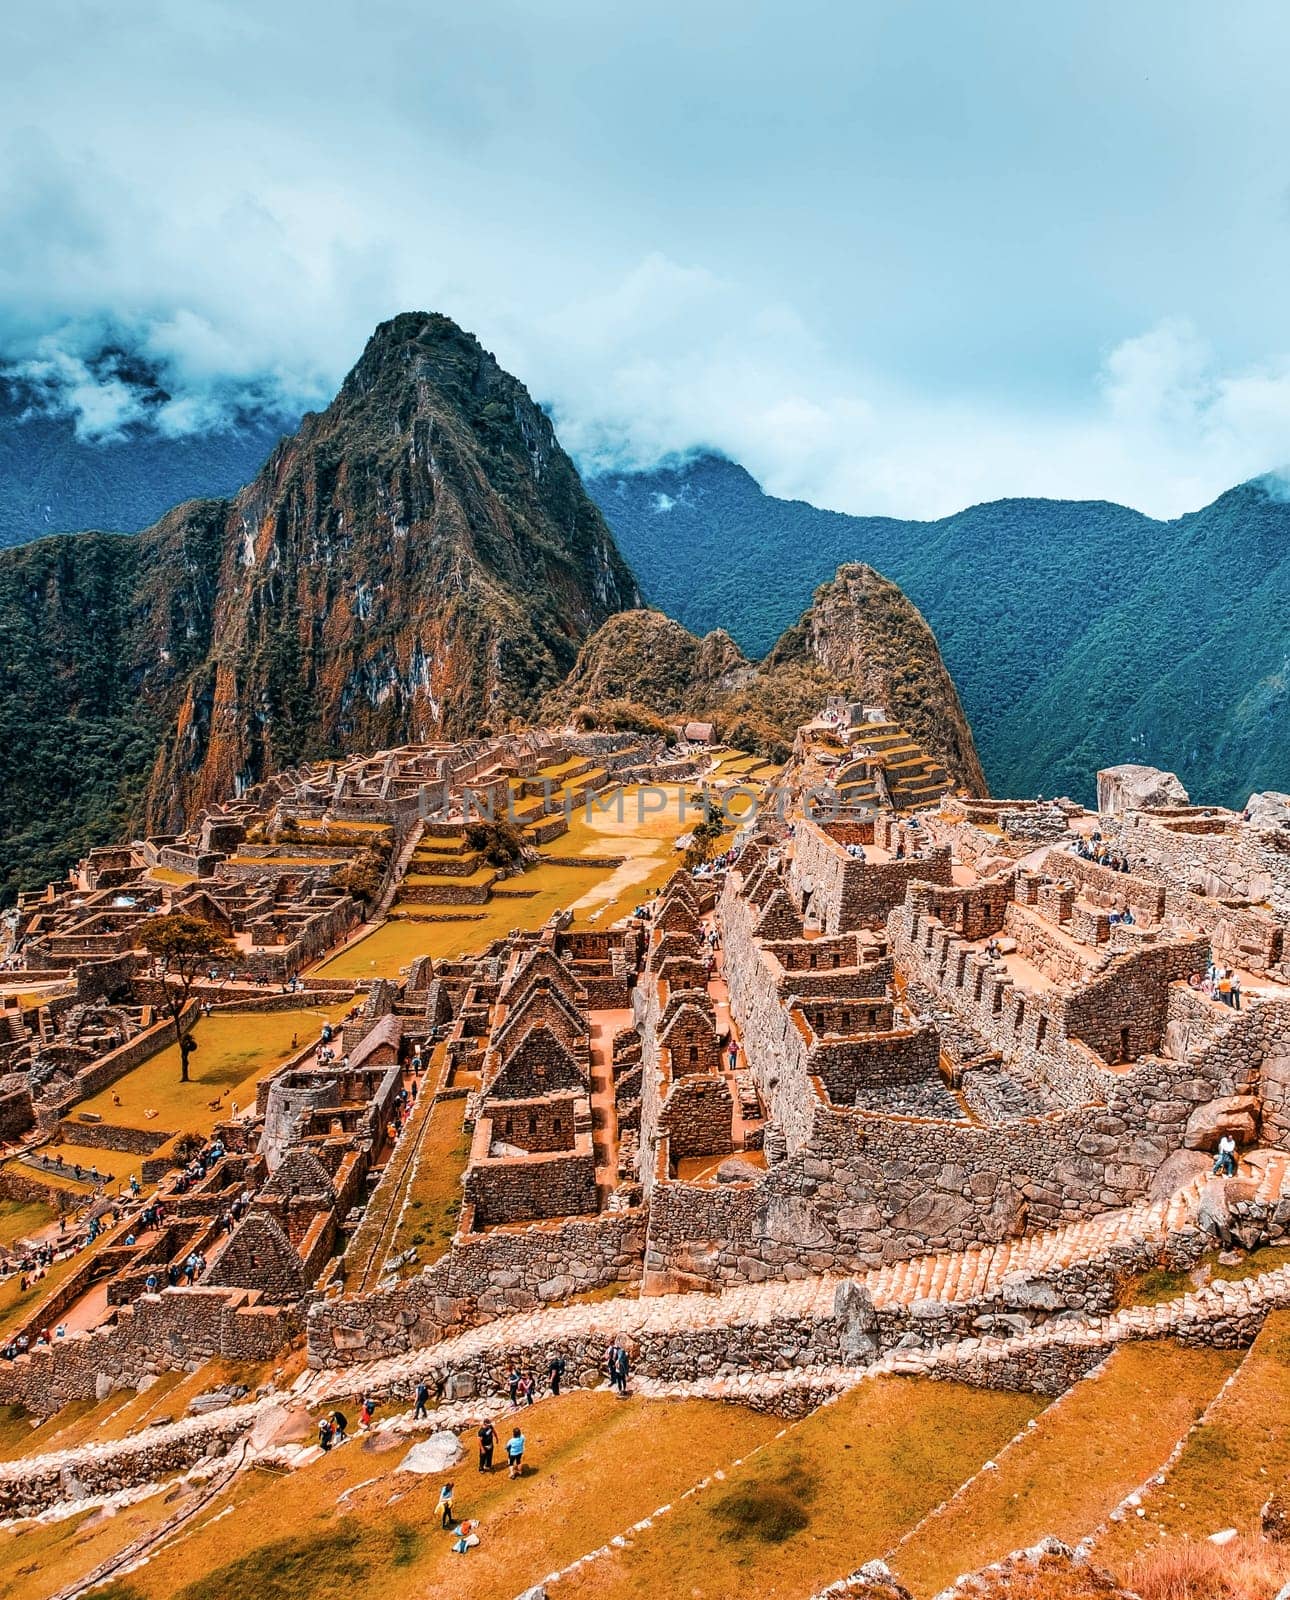 Breathtaking landscape of ancient majestic Machu Picchu city by GekaSkr